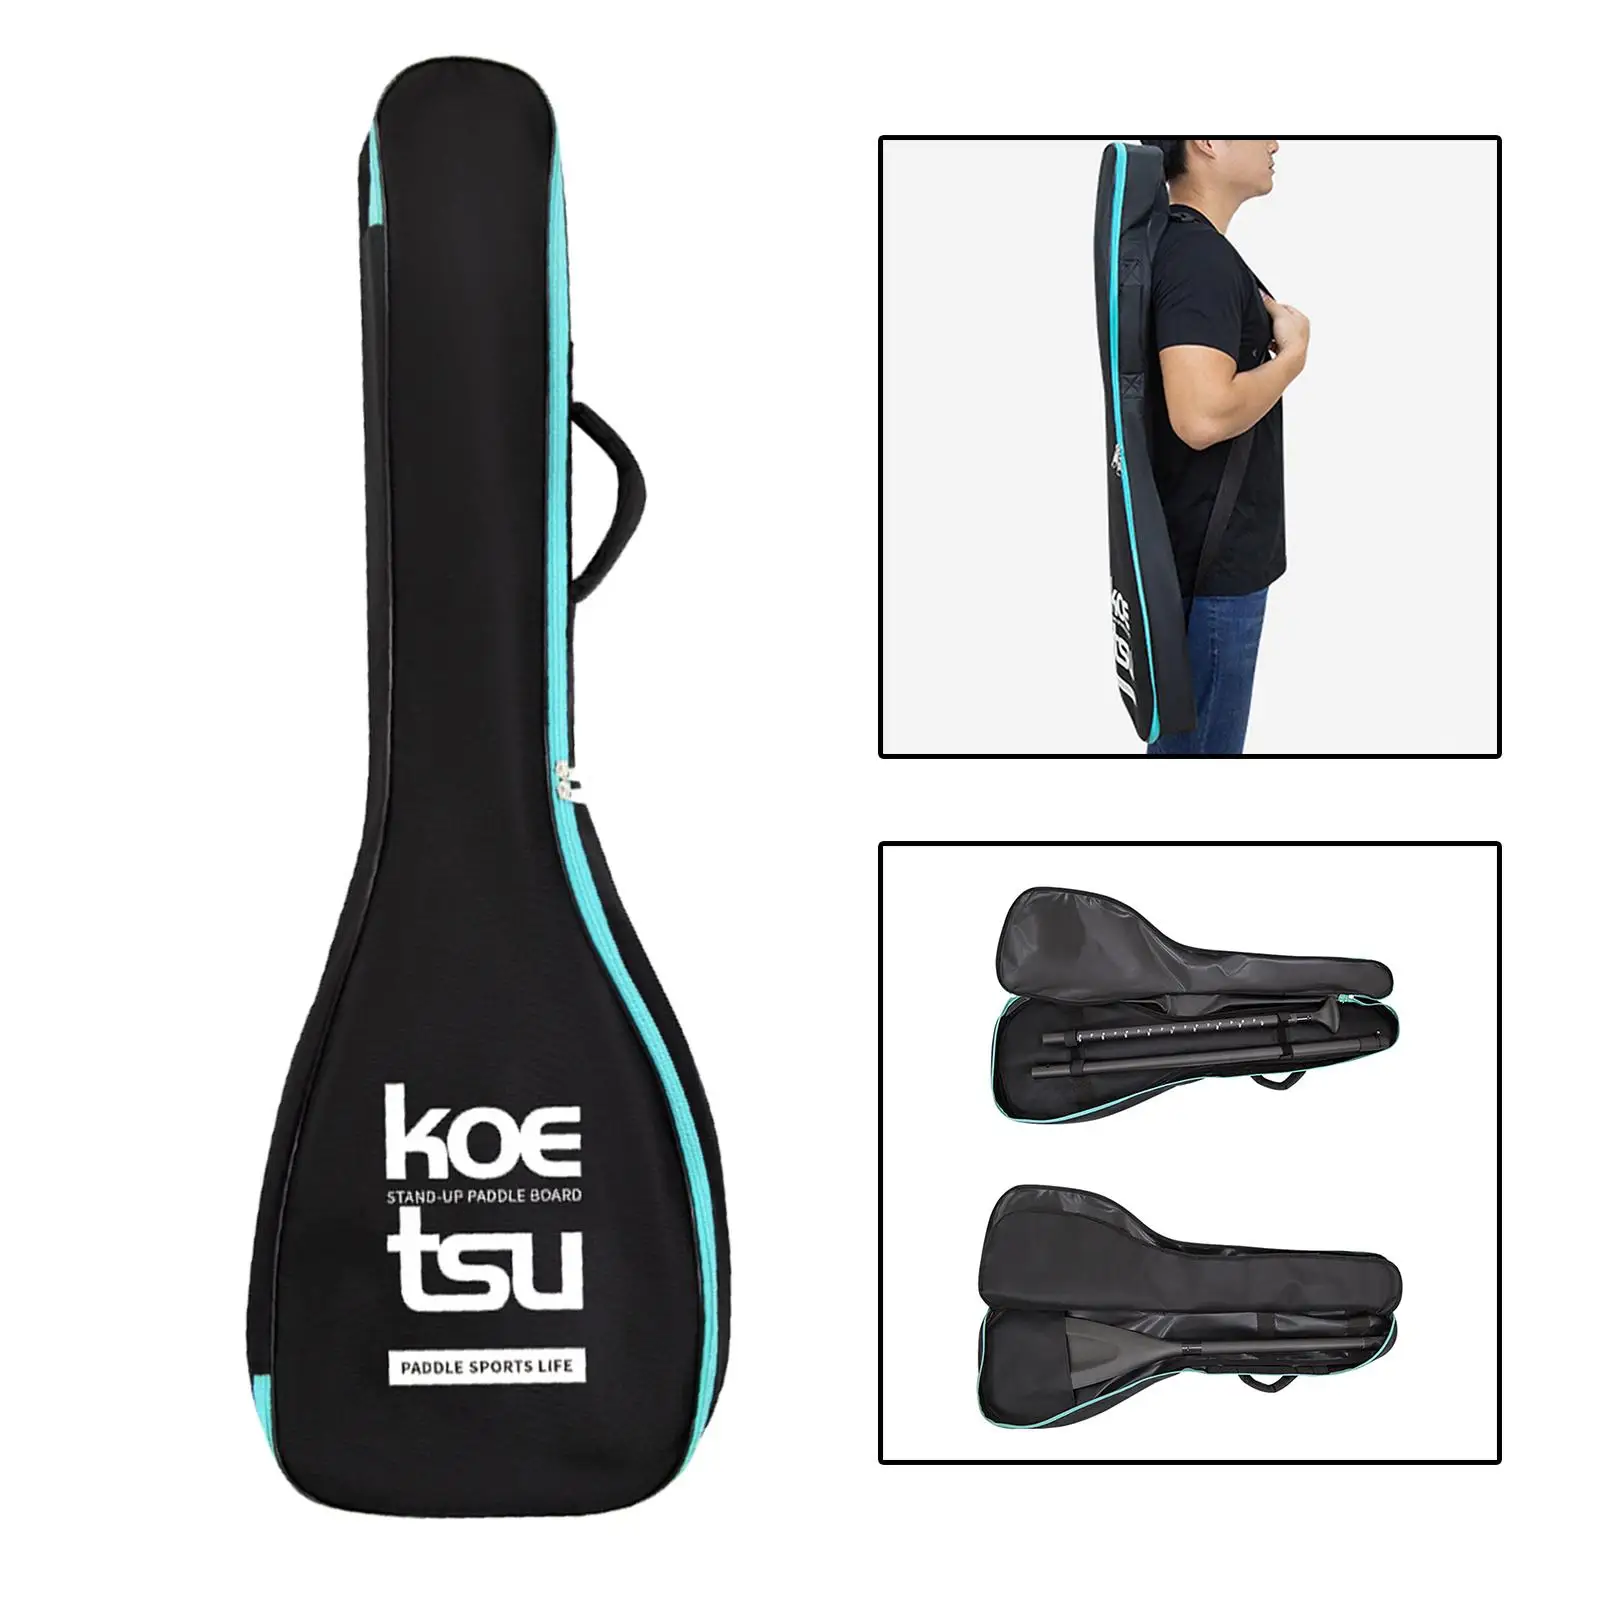 Kayak Paddle Bag Kayak Accessories Thick Durable Portable Paddle